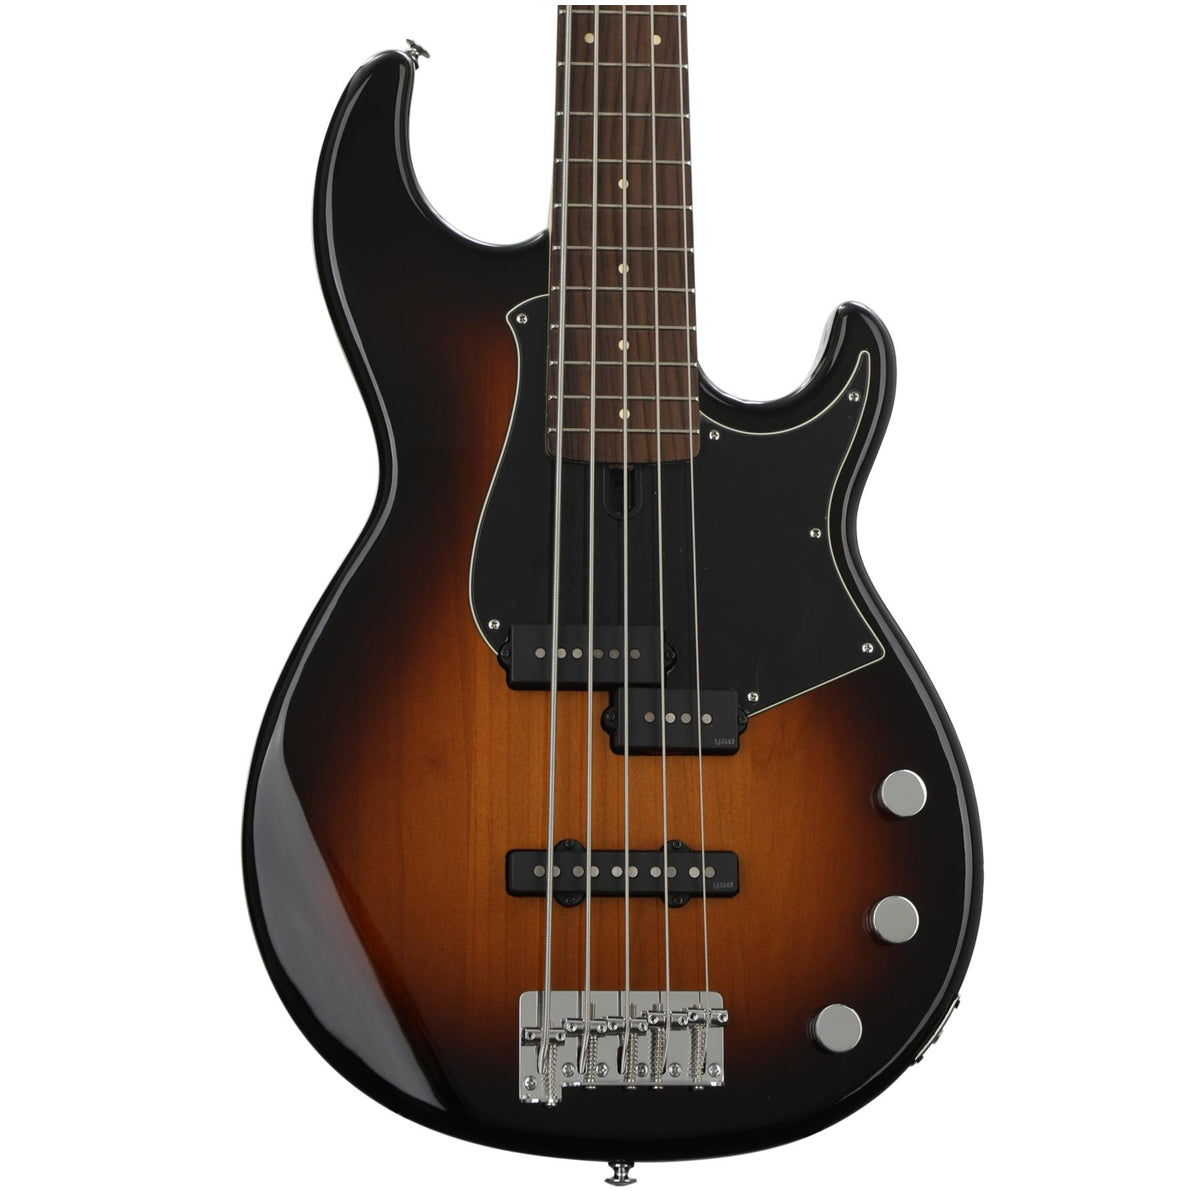 Yamaha BB 435 Electric 5-String Bass Guitar - Tobacco Brown Sunburst